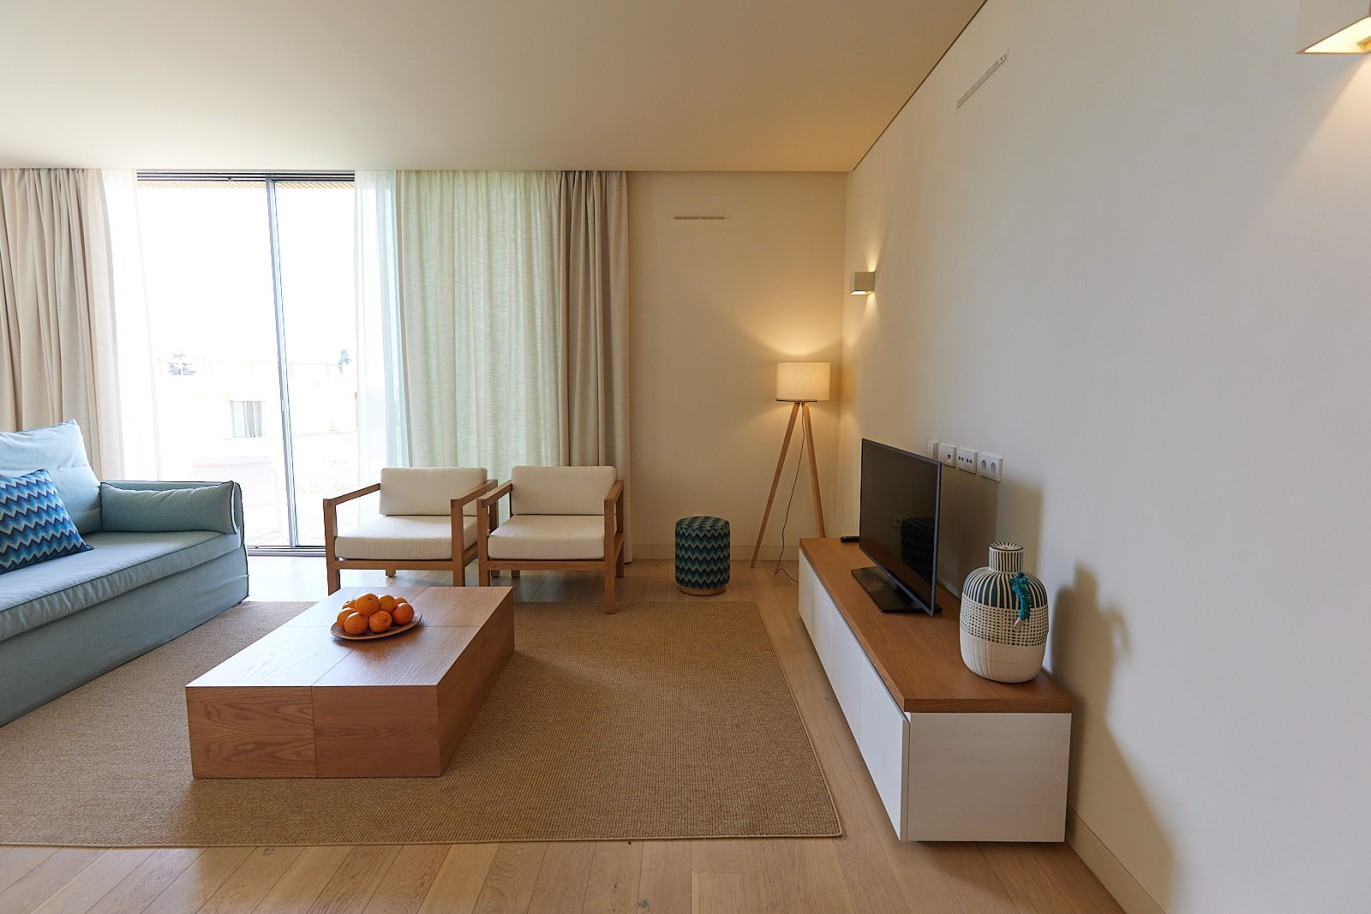 1 bedroom apartment in resort, for sale in Porches, Algarve_228995